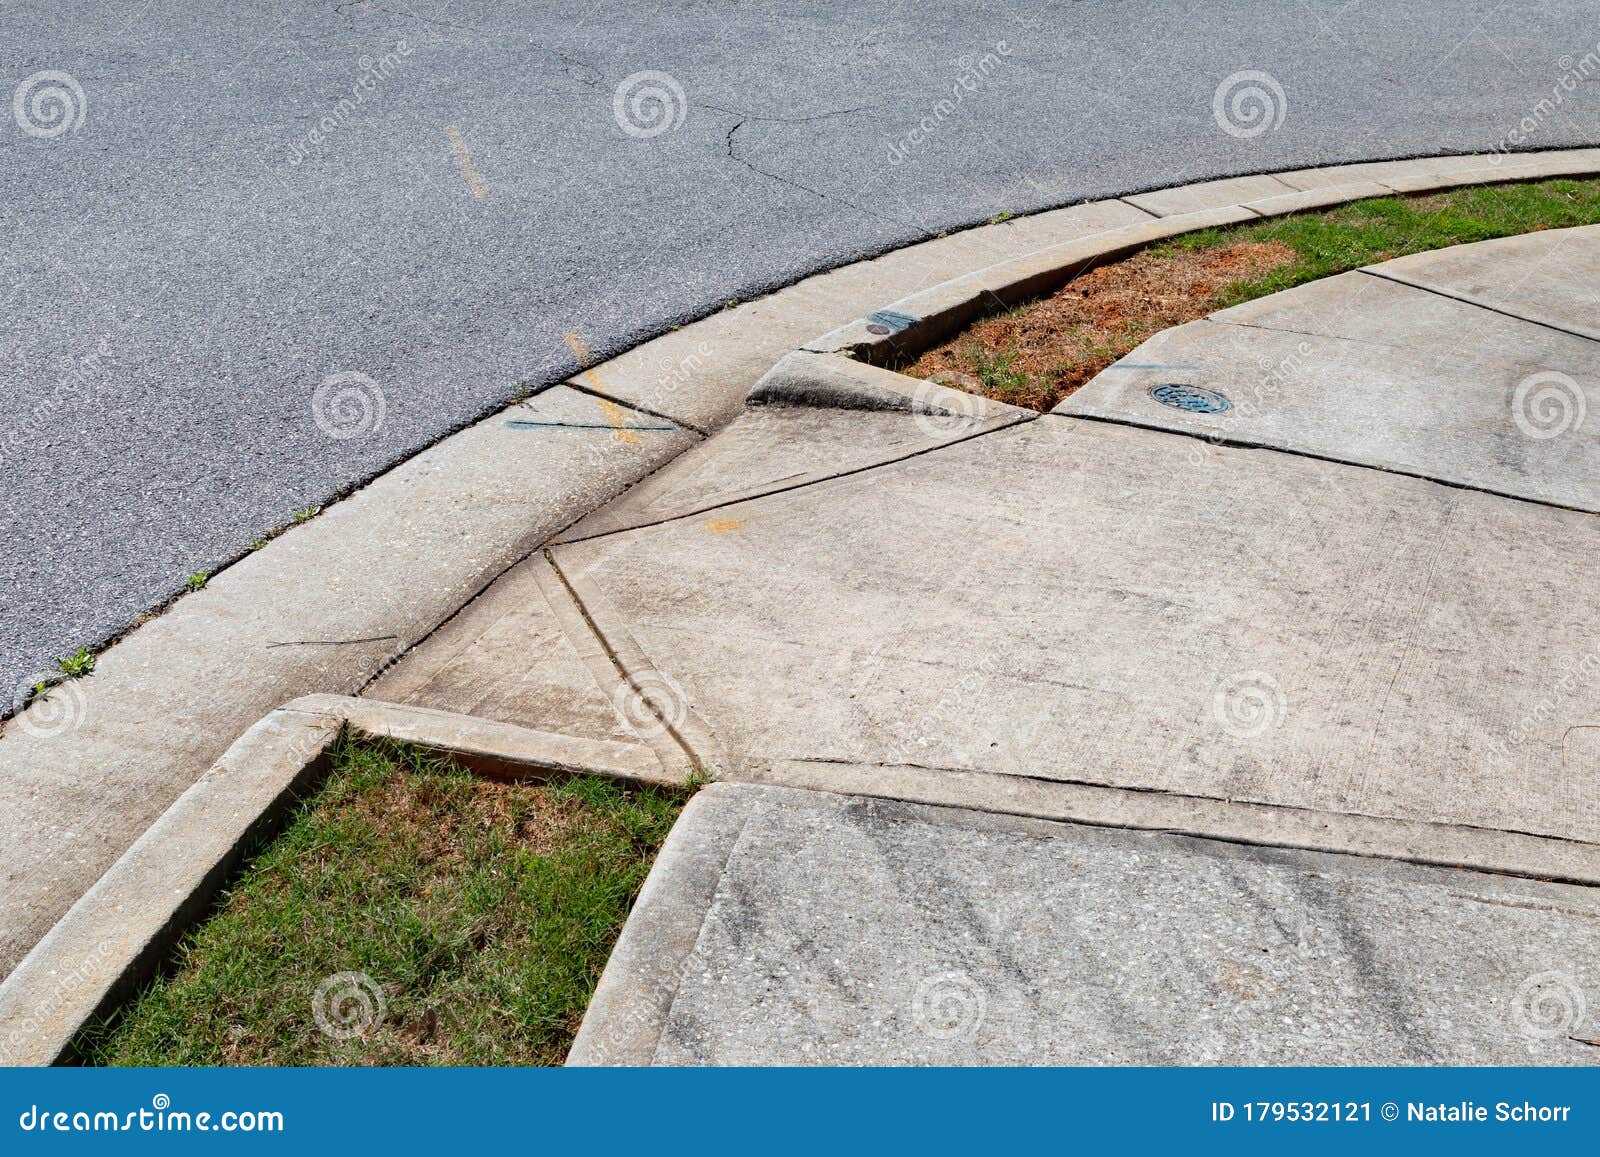 asphalt street and concrete sidewalk with graded ramp between, green grass